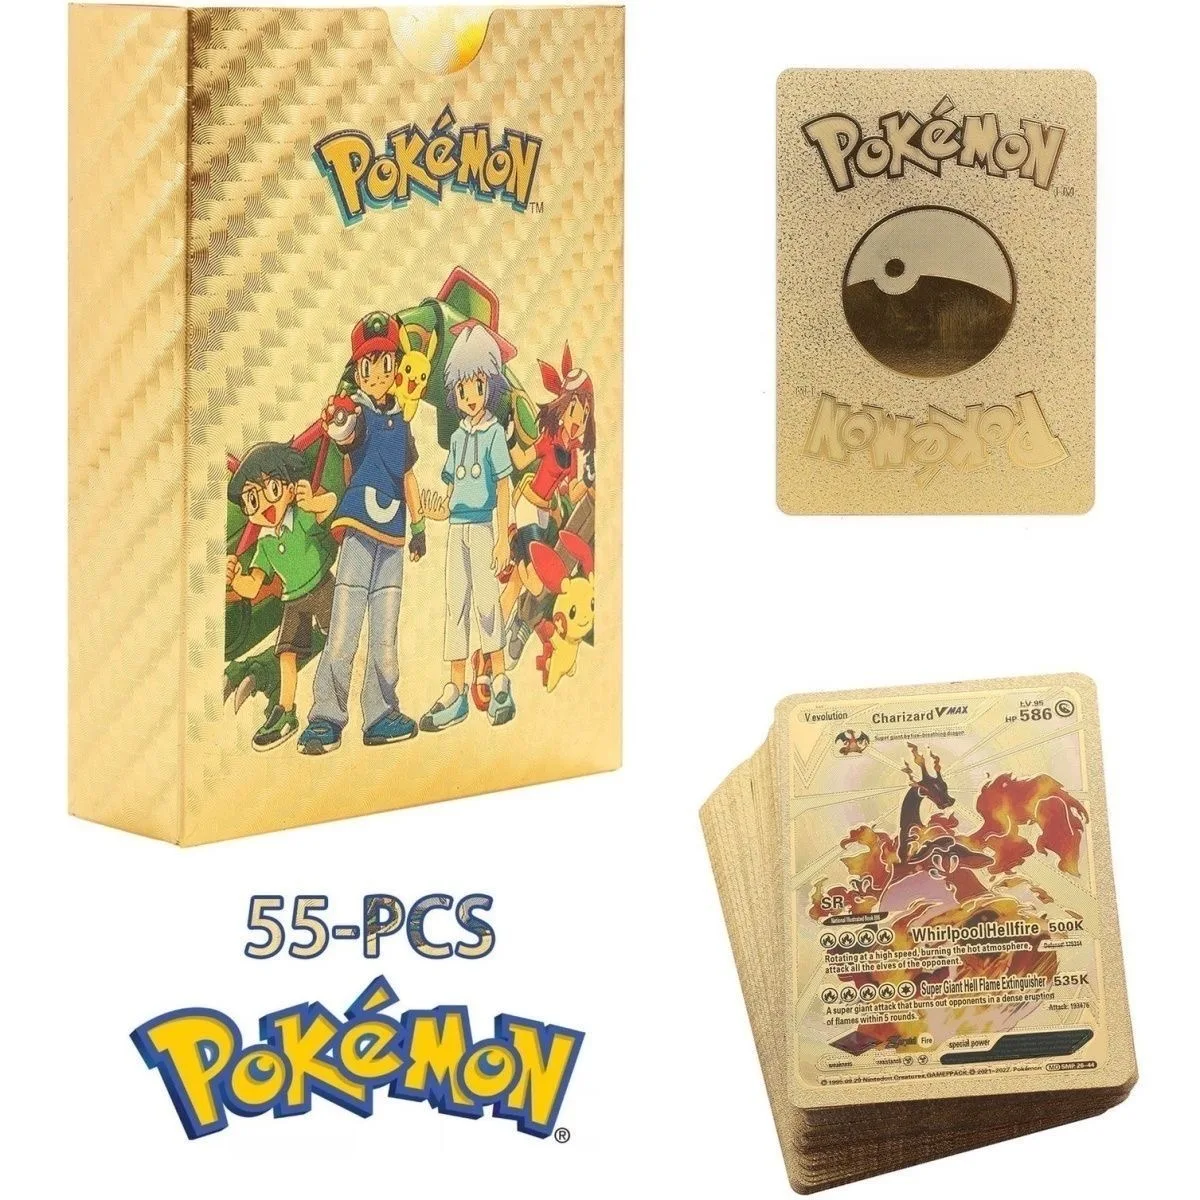 

5/27/55Pcs Pokemon Card Gold Sliver Spanish Vmax GX Energy Card Charizard Pikachu Rare Collection Battle Trainer Boys Gift